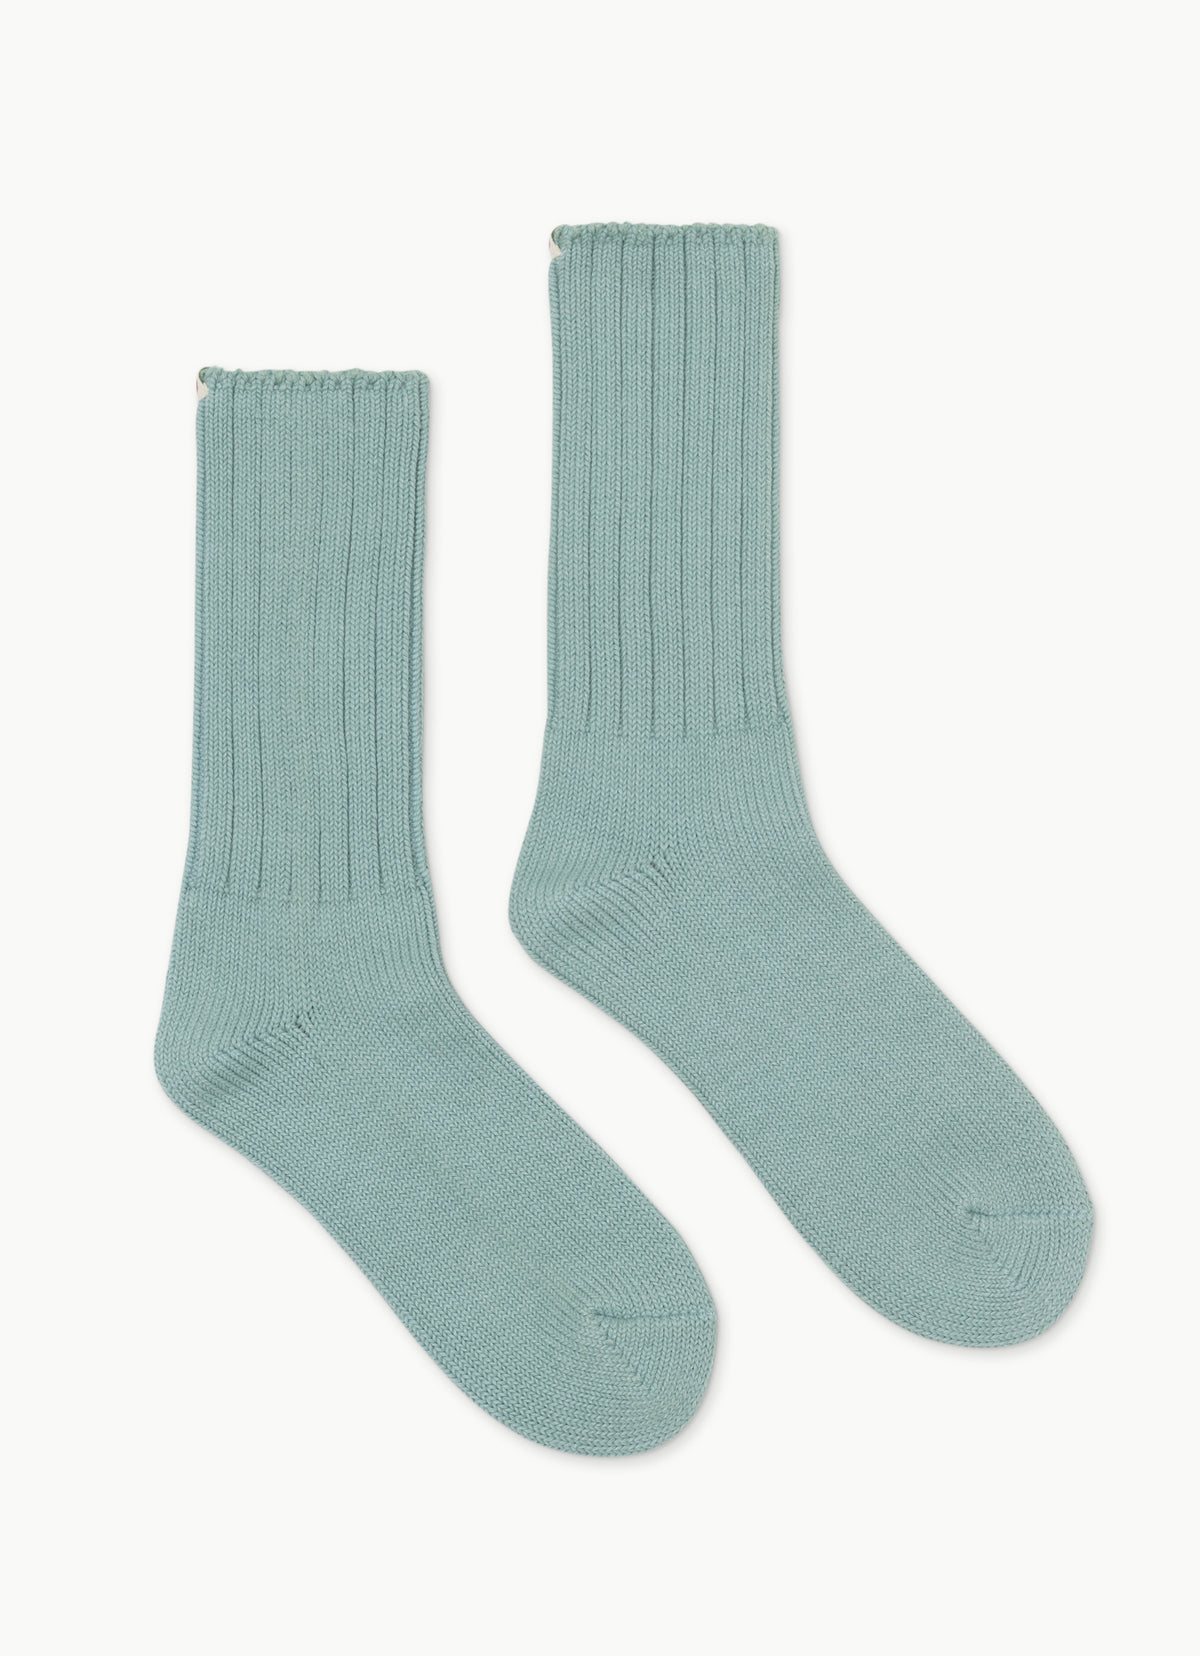 Bulky Rib ankle socks_dyed_Pastel Turquoise